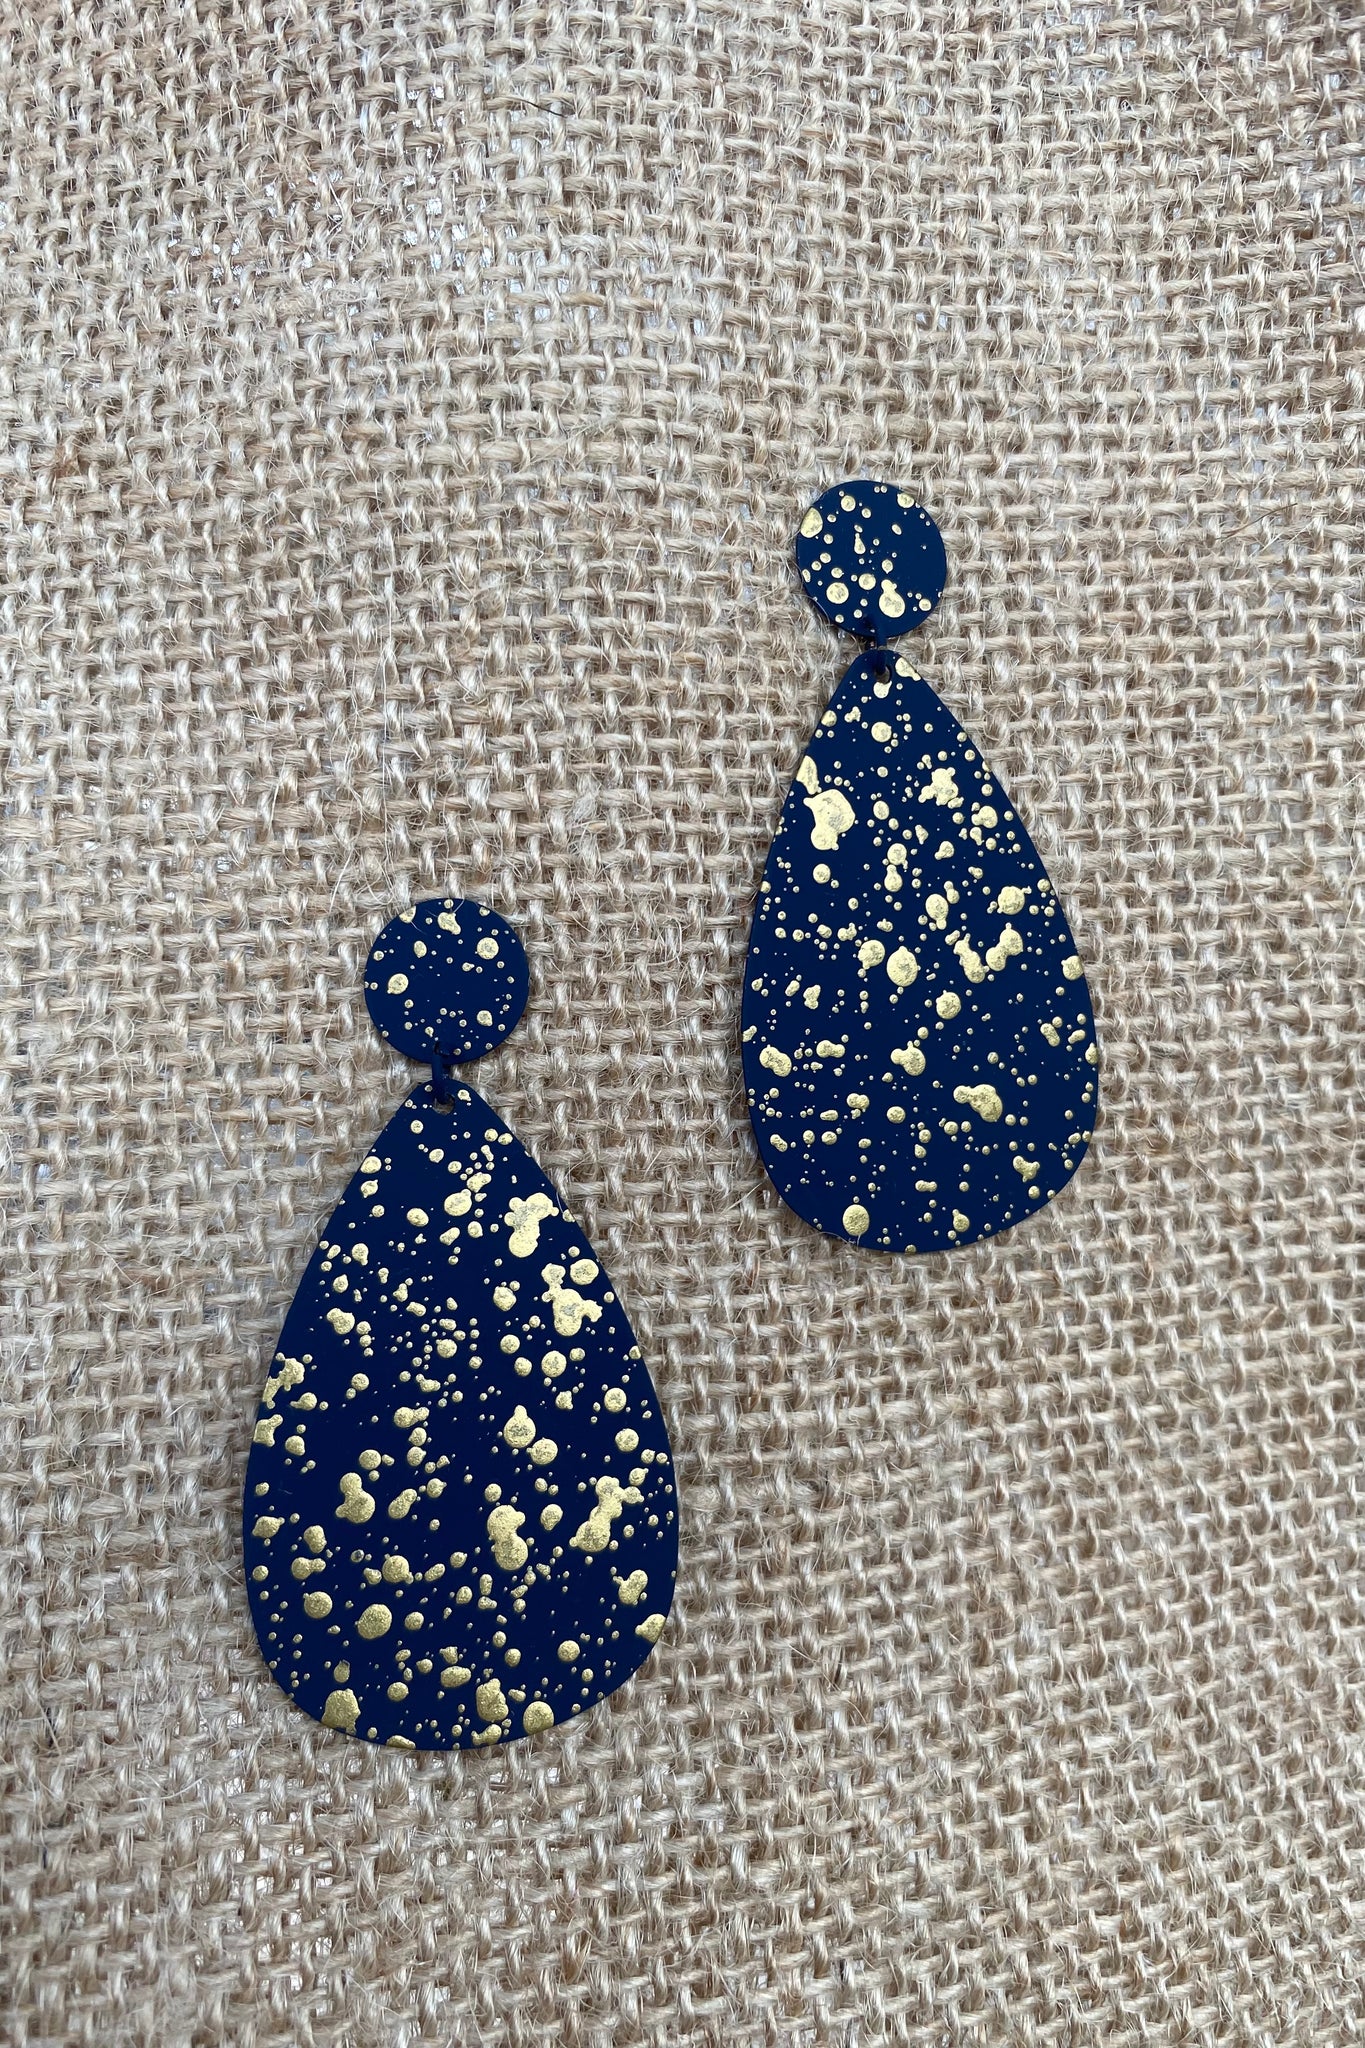 Navy Gold Speckled Dangle Earrings